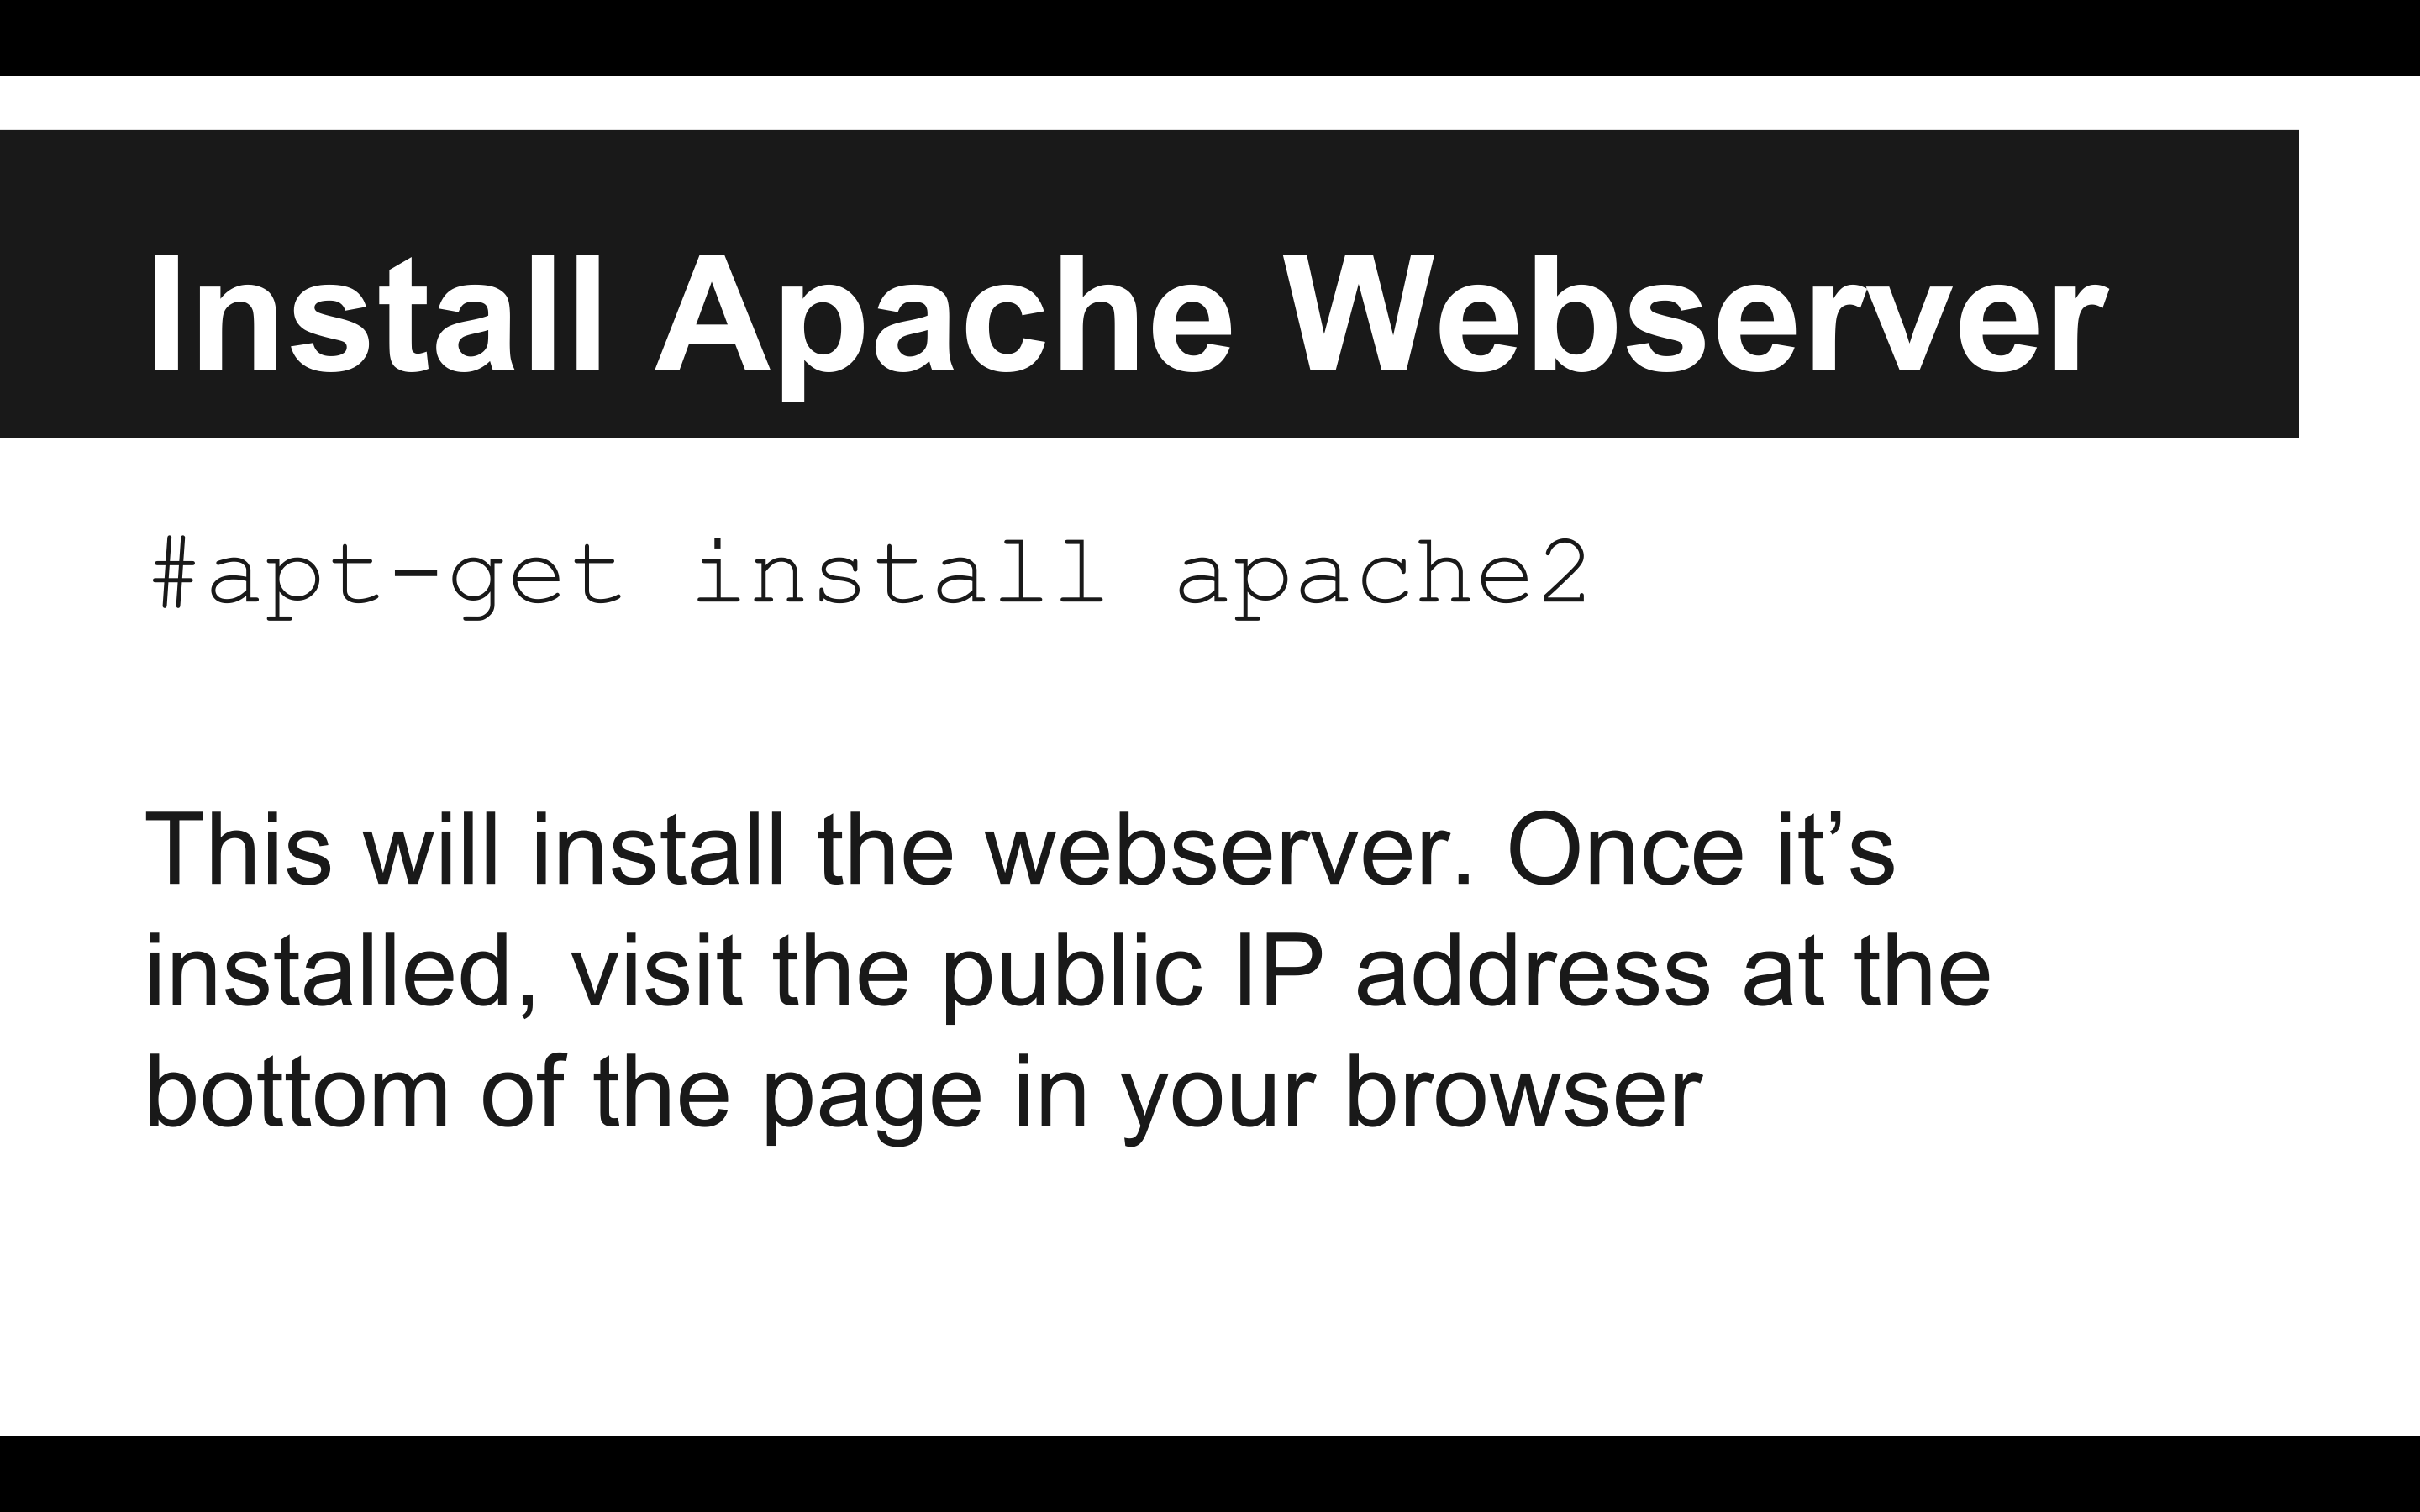 apt-get install apache2